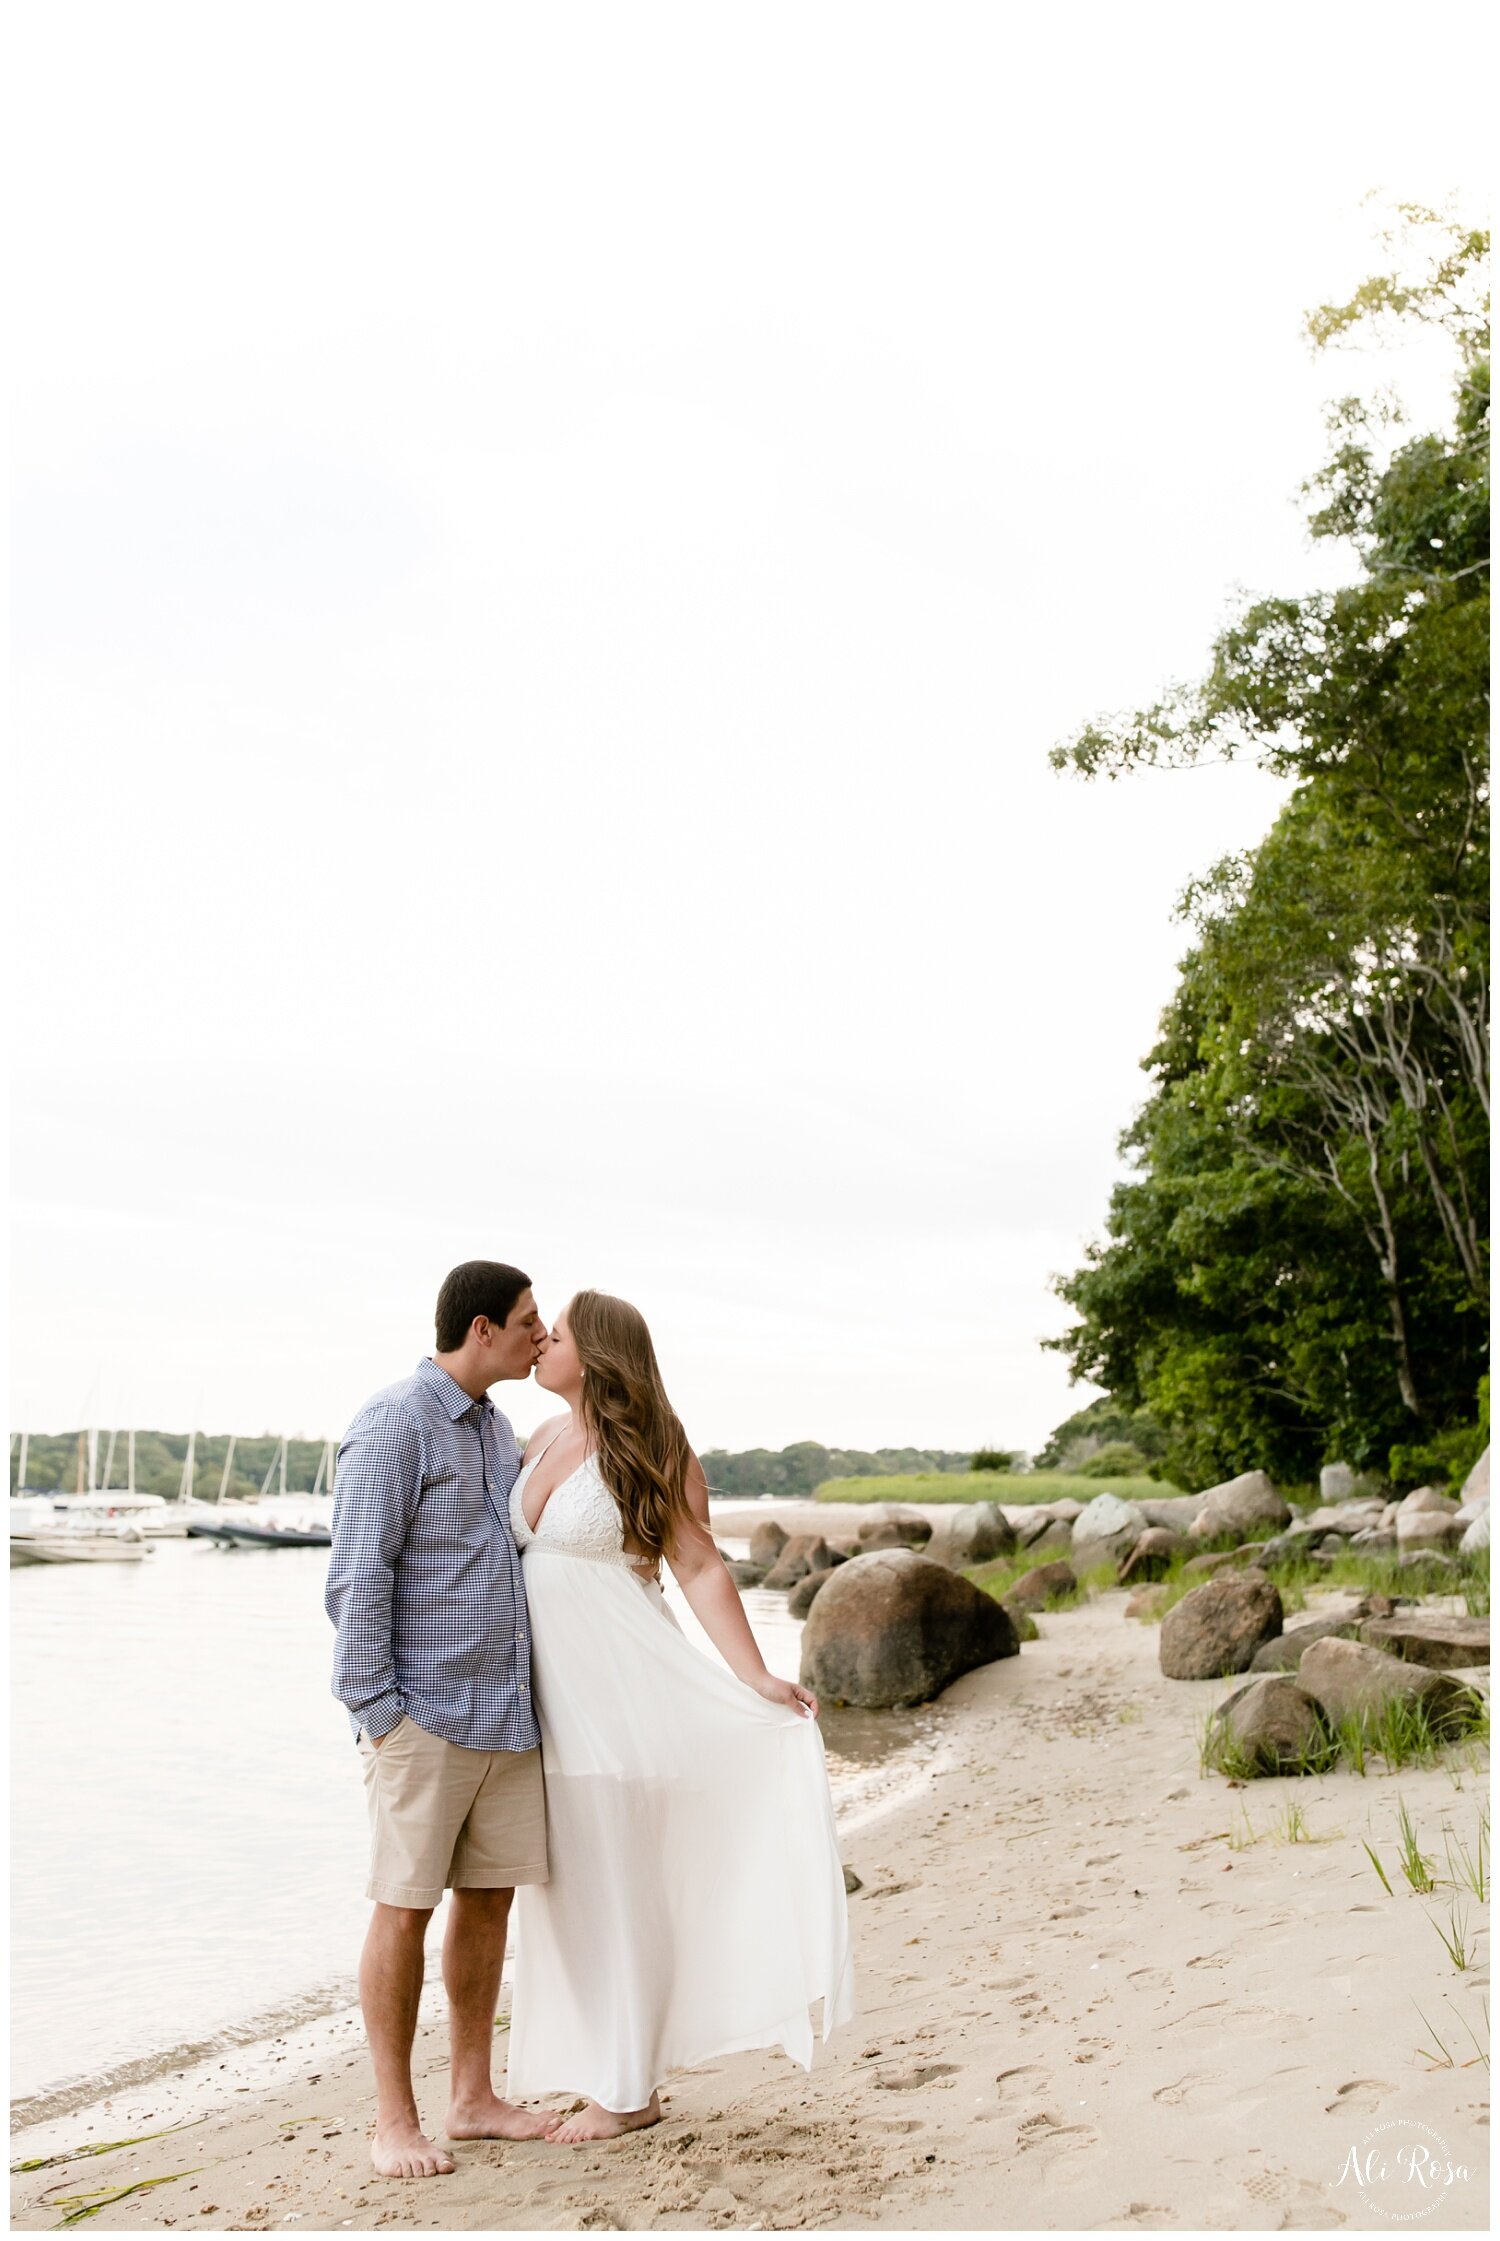 The Knob Falmouth engagement photos Boston Cape Cod wedding Photographer Ali Rosa007.jpg